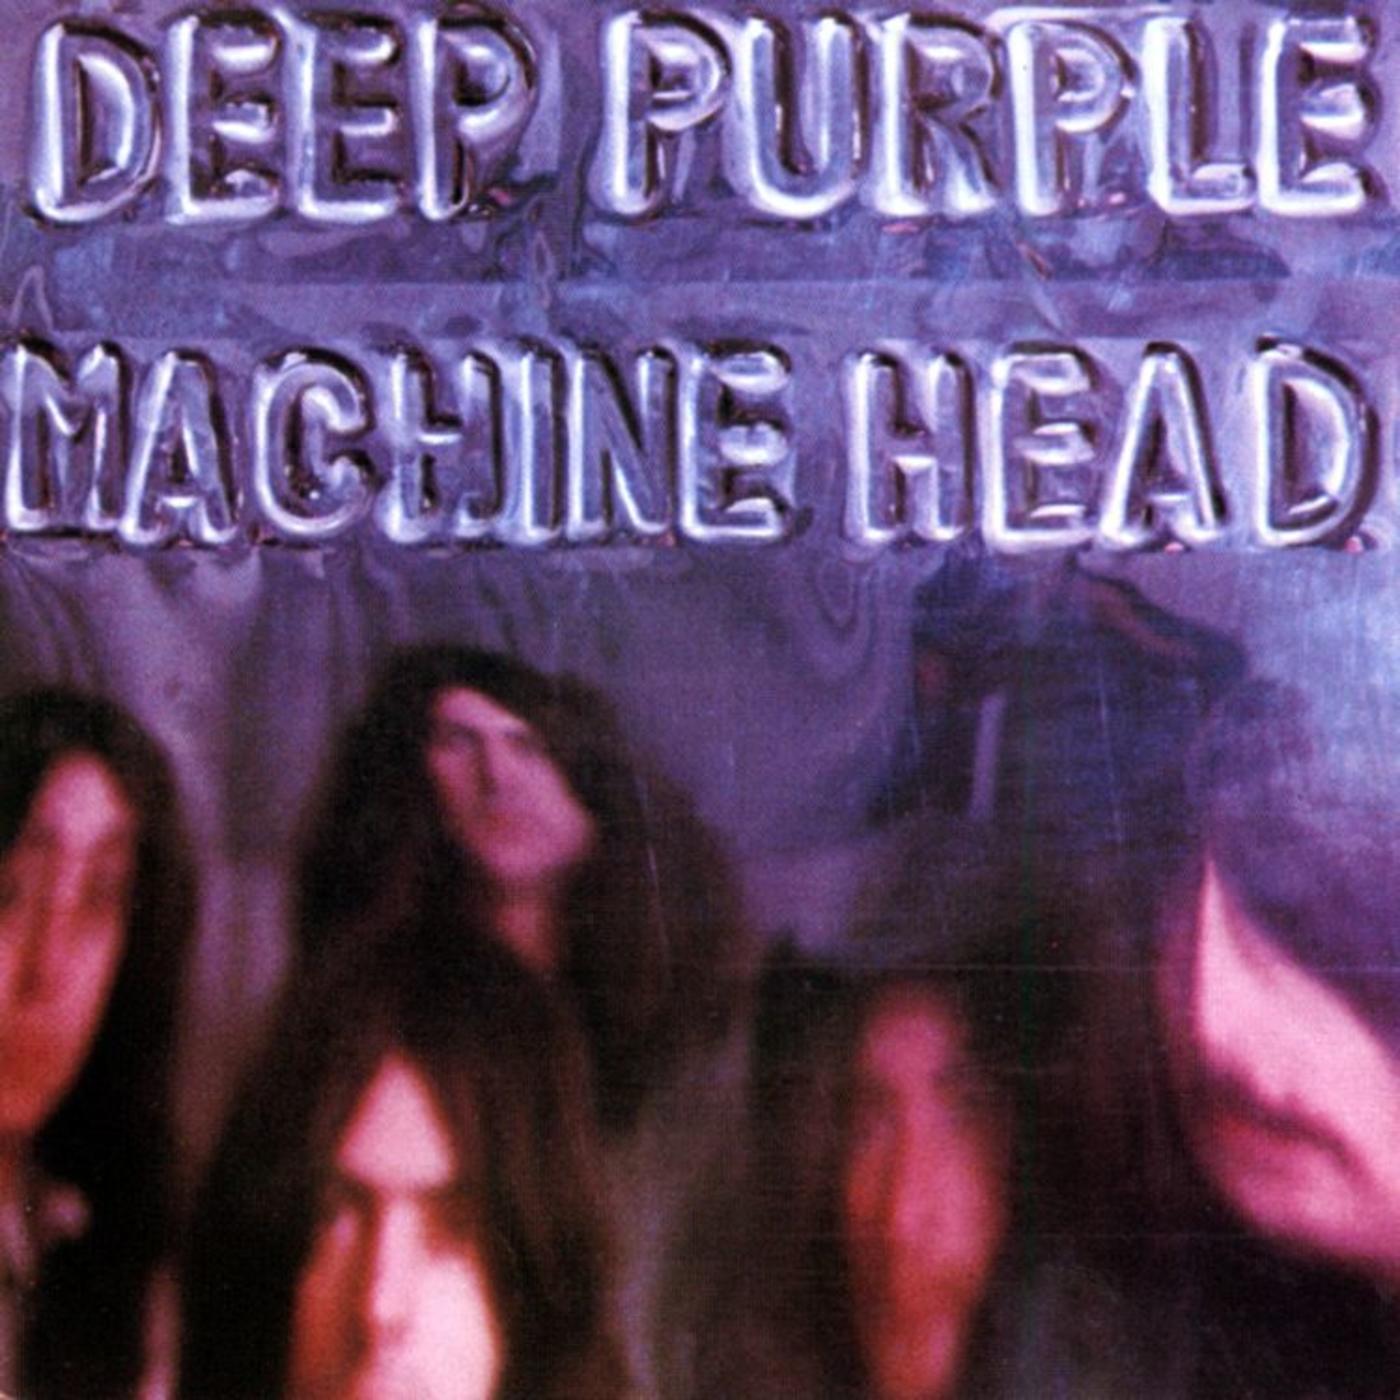 Deep Purple - The Complete Albums 1970-1976 | Rhino